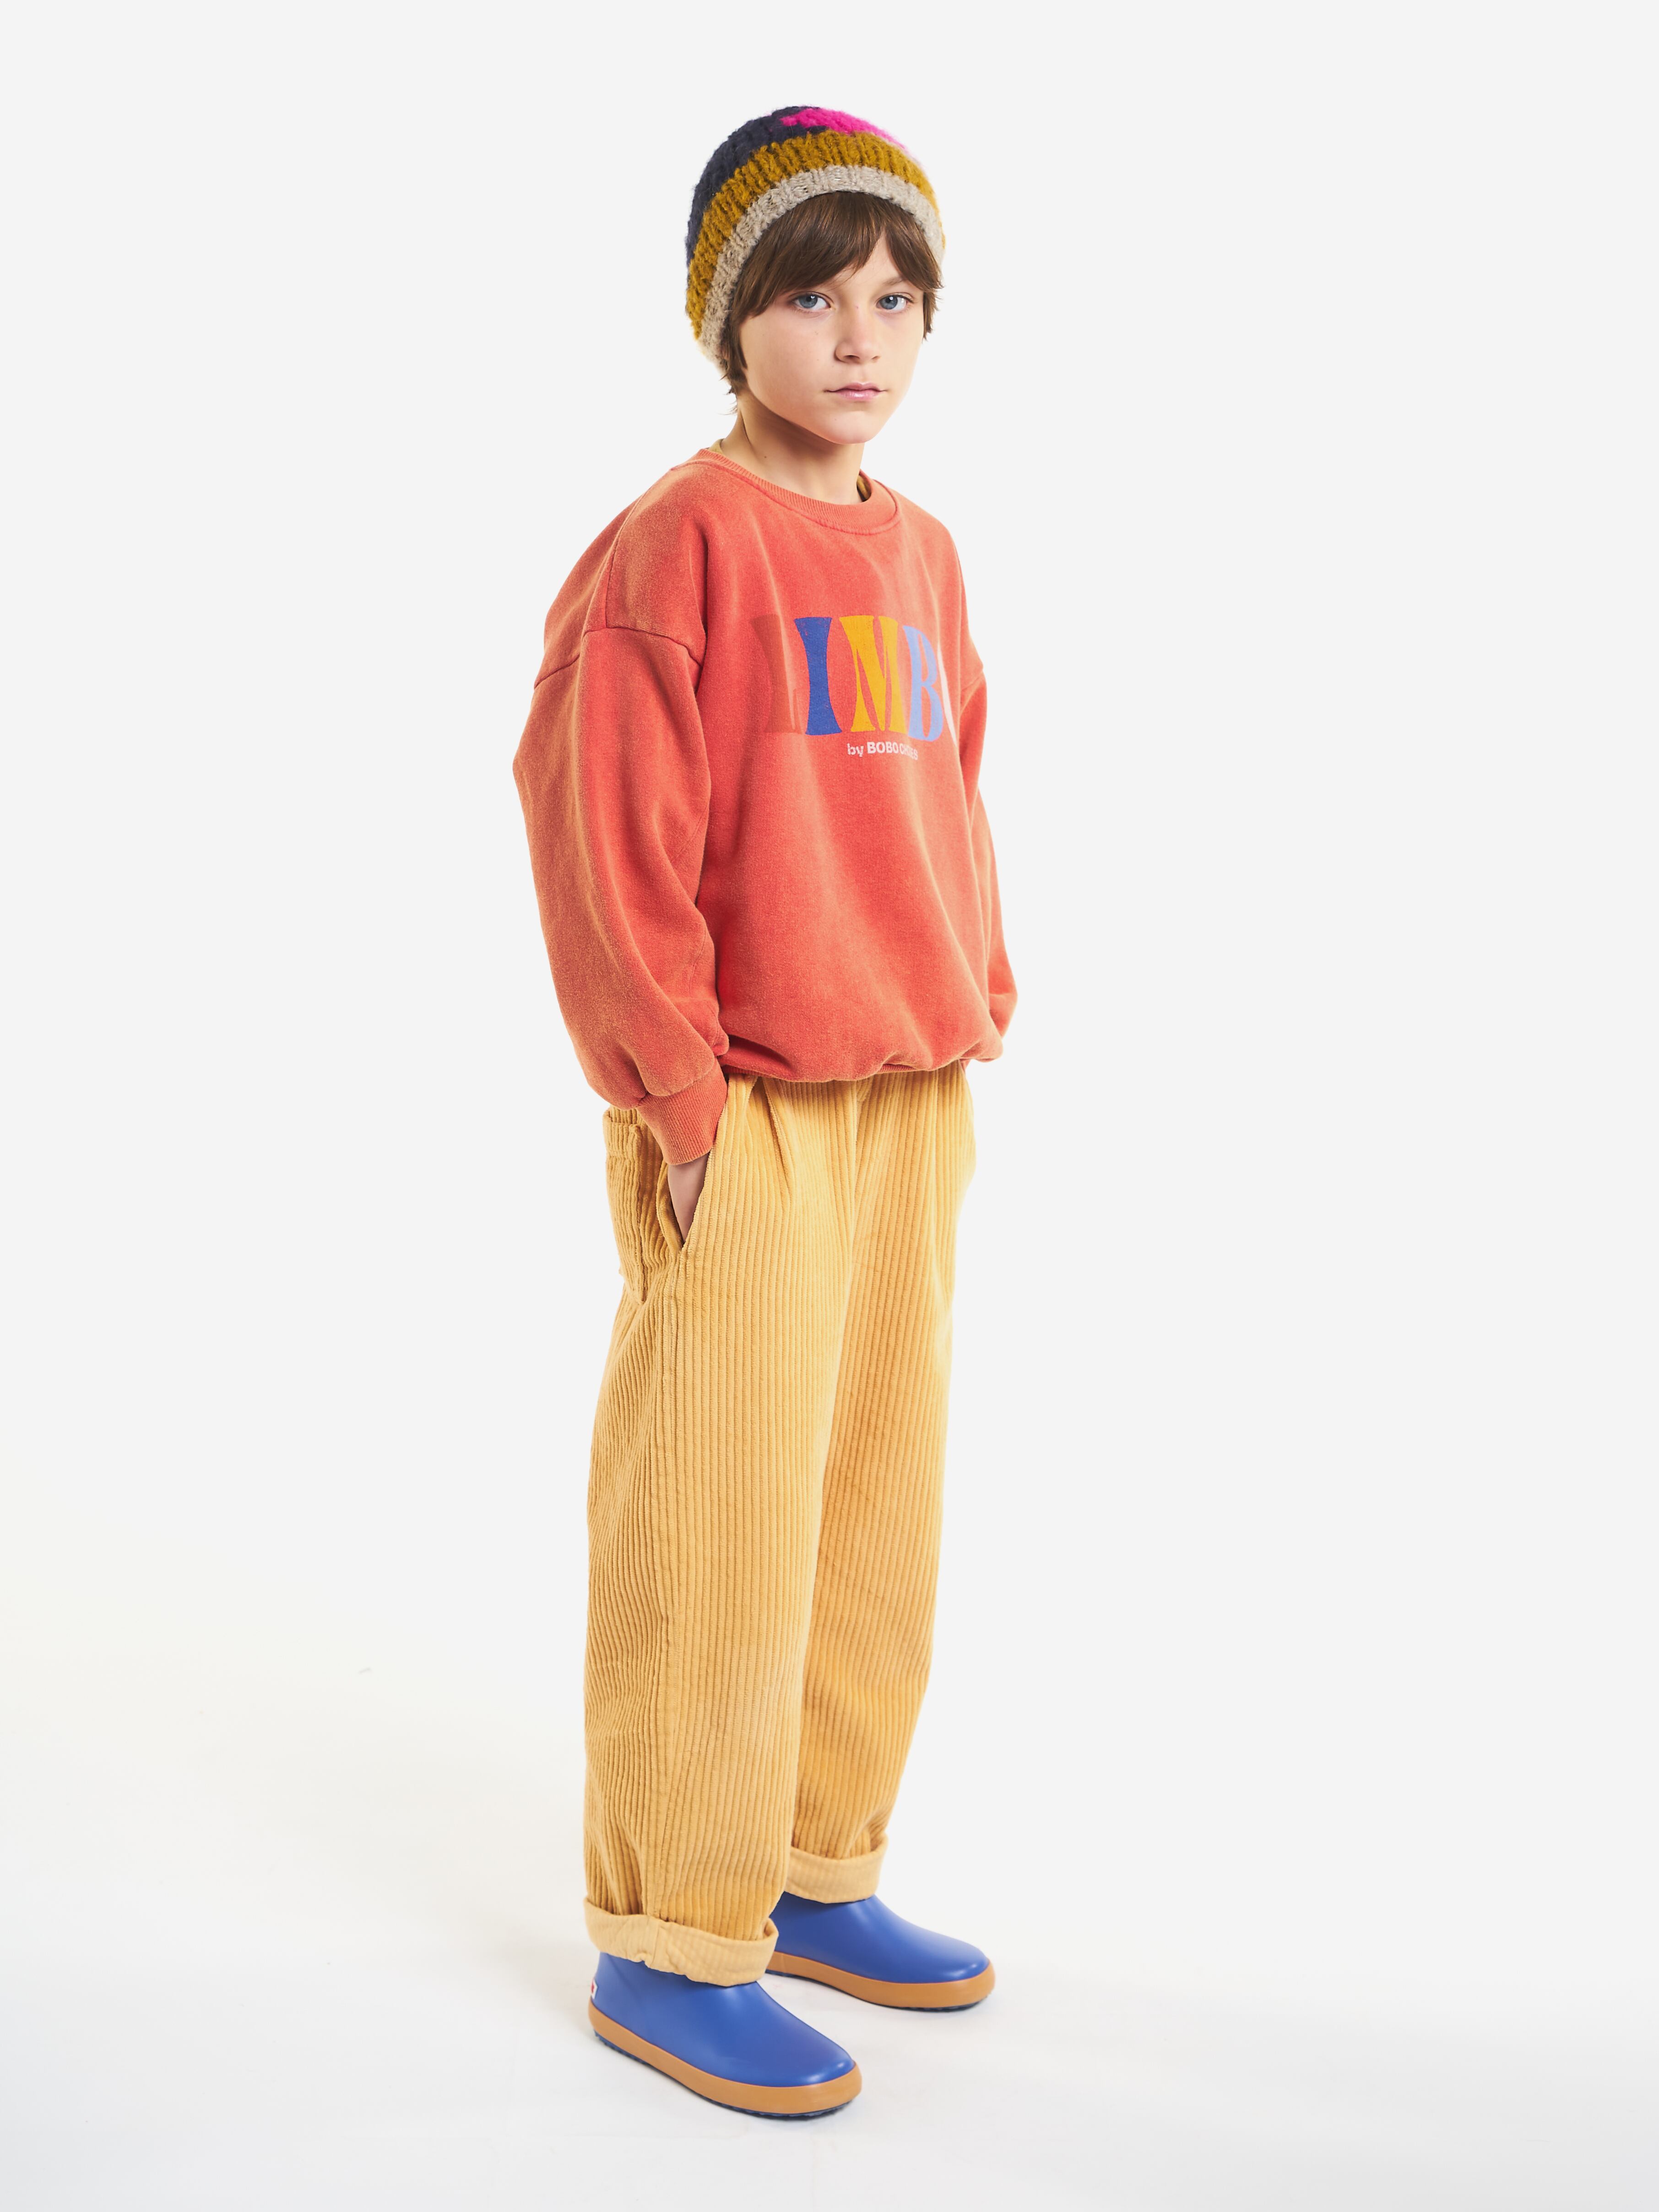 BOBO CHOSES / Limbo sweatshirt / Kids | HAKONIWA PRODUCTS | ハコニワプロダクツ |  おしゃれな海外子供服・キッズウェア・ベビー服の通販 powered by BASE